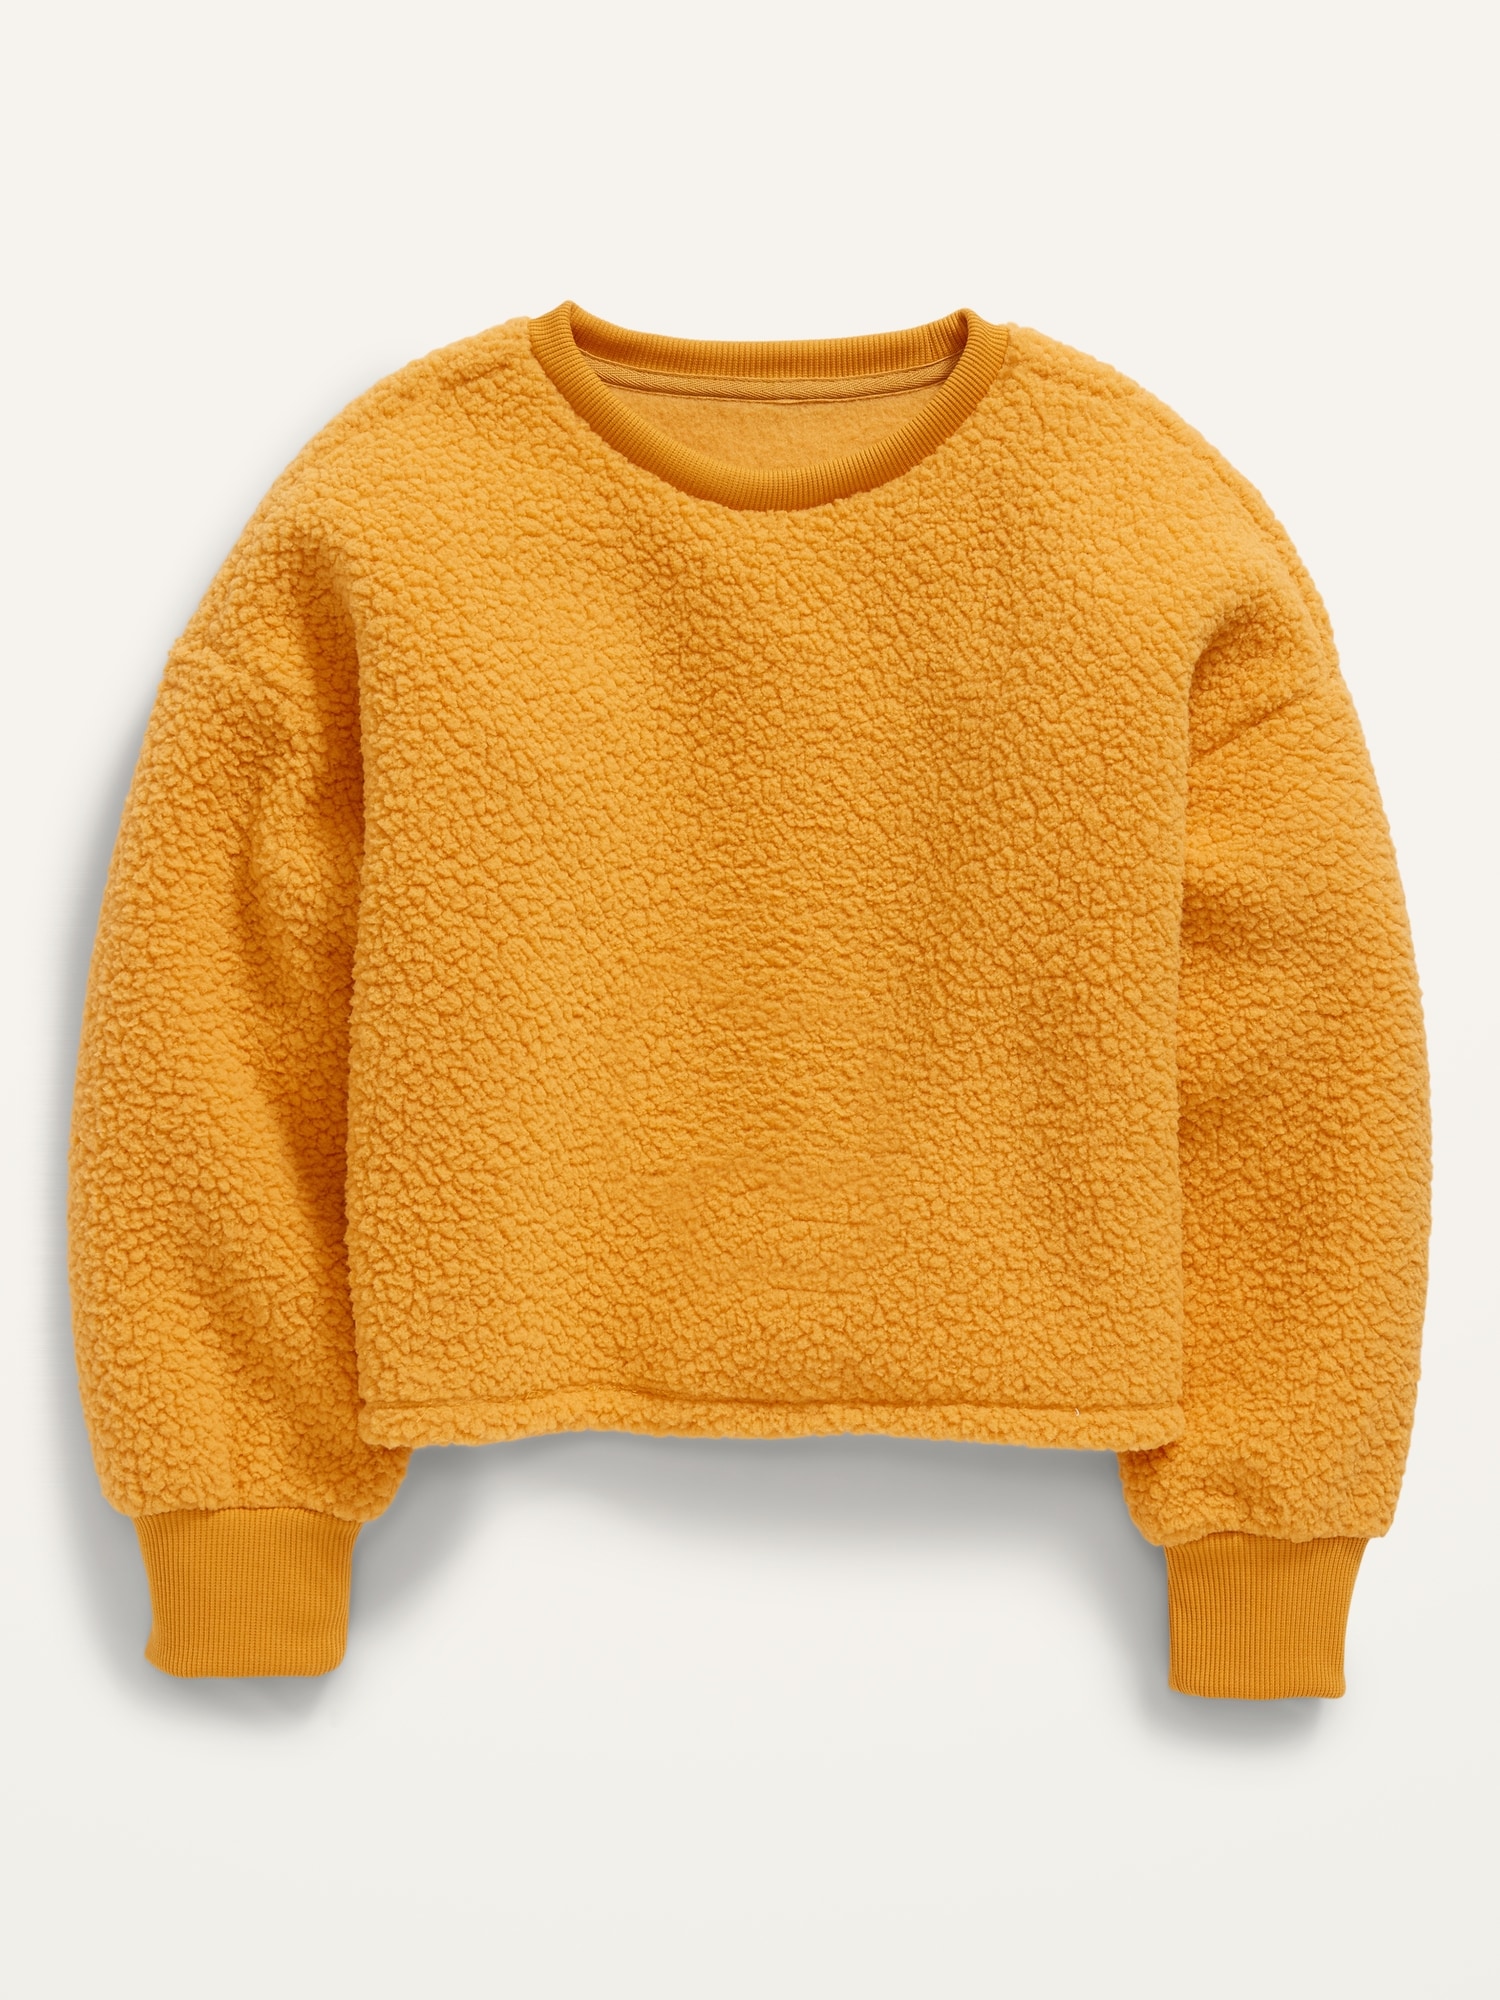 Old Navy Slouchy Sherpa Sweatshirt for Girls yellow. 1